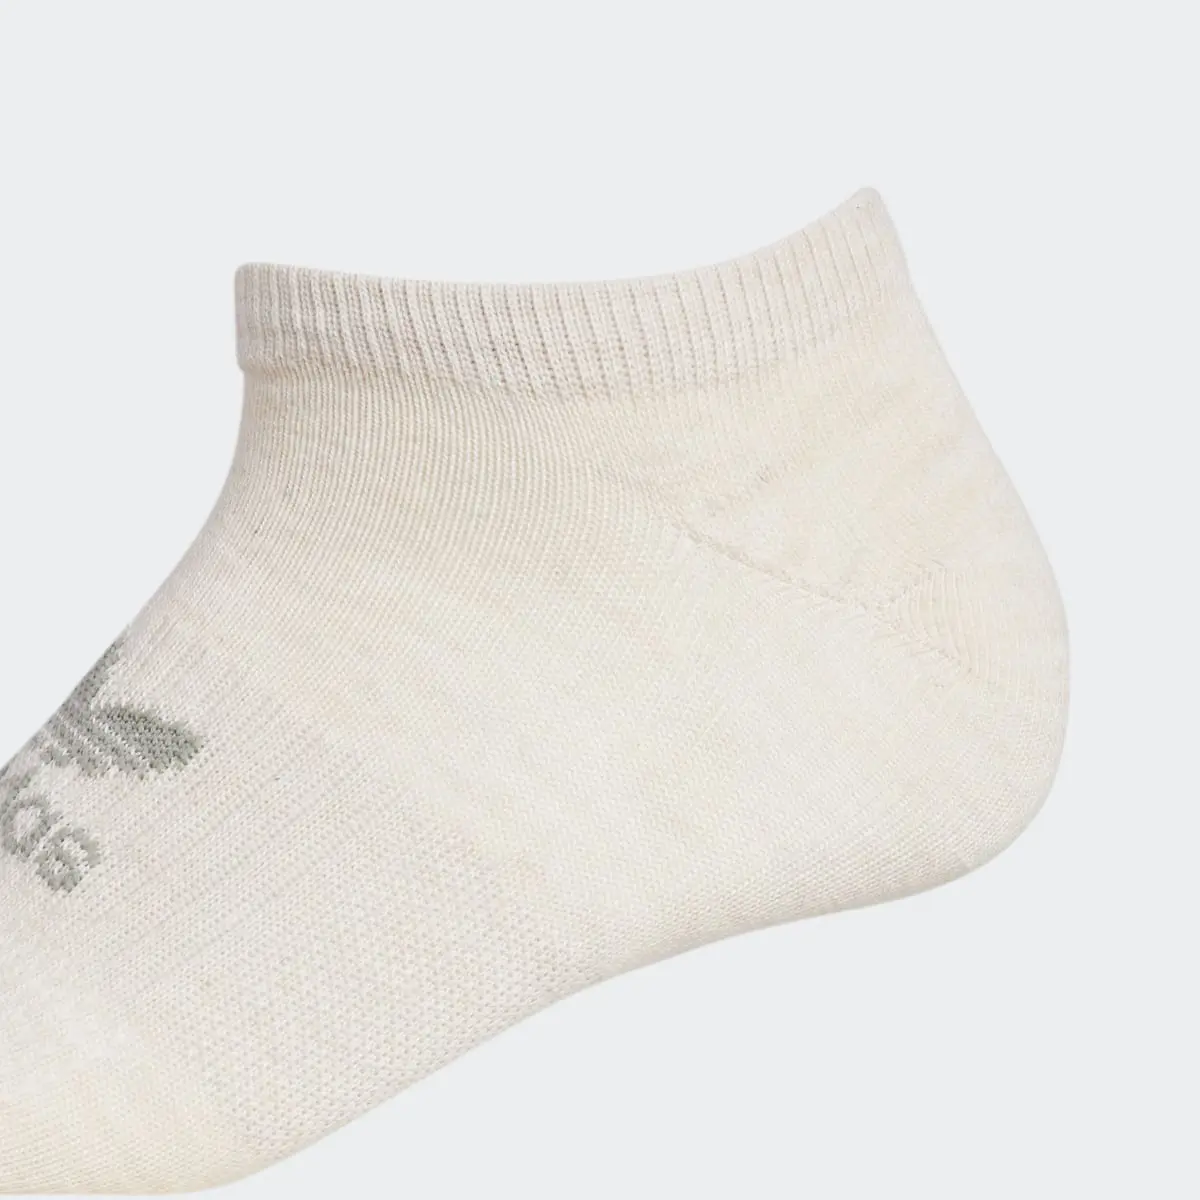 Adidas Classic Superlite No-Show Socks 6 Pairs. 3